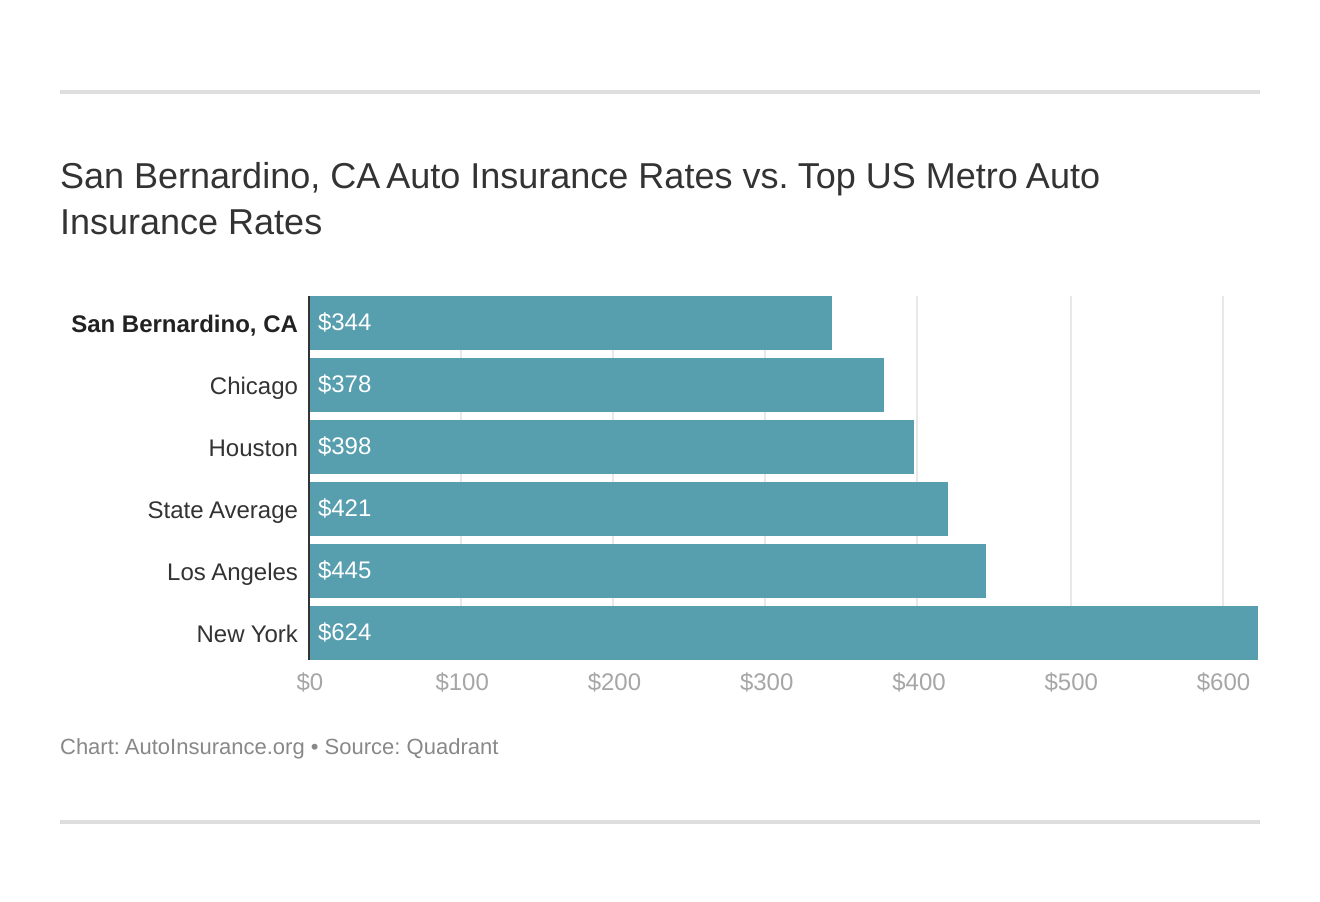 San Bernardino, CA Auto Insurance Rates vs. Top US Metro Auto Insurance Rates